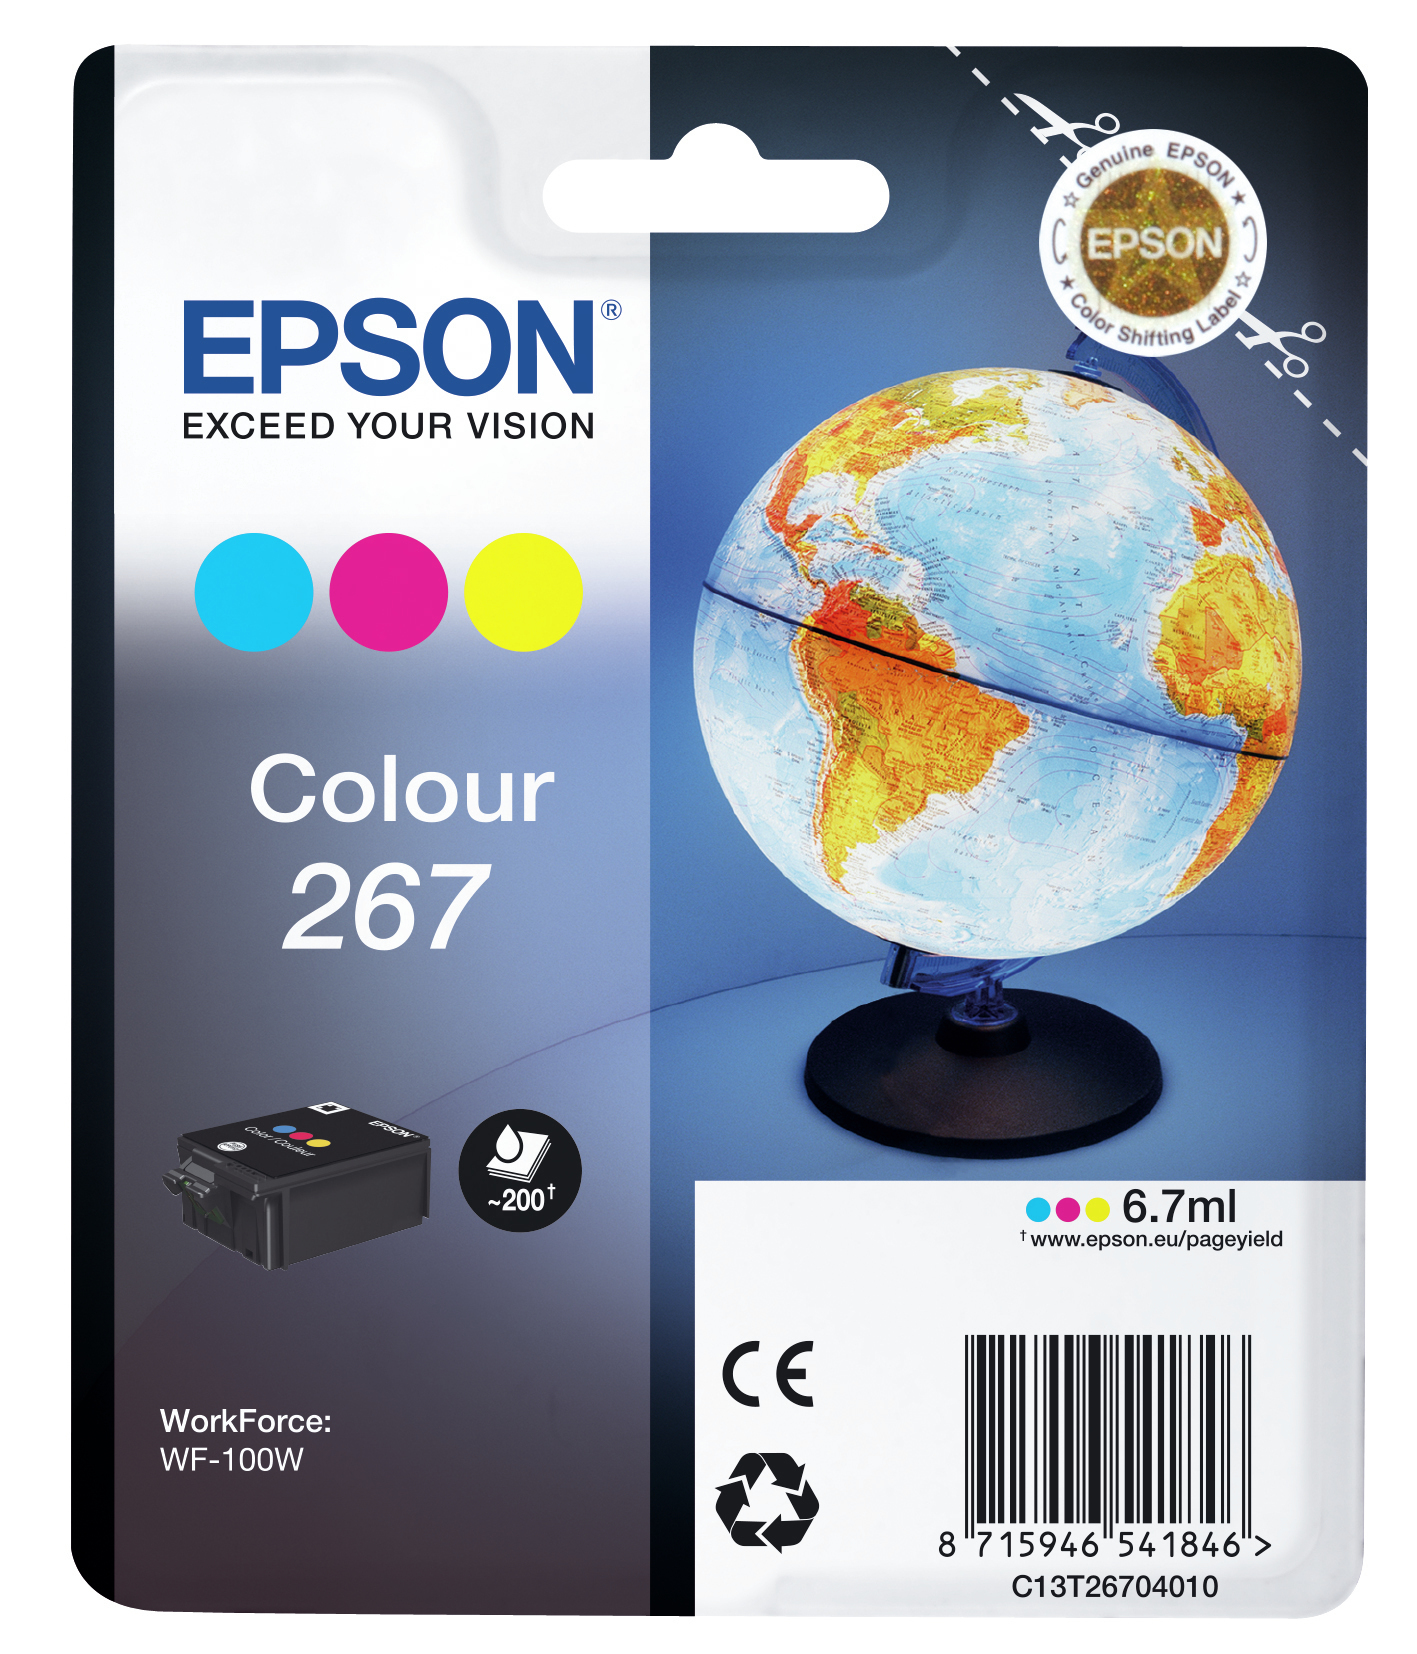 Singlepack Colour 267 Ink Cart Epson Consumer Ink S1 C13t26704010 8715946541846